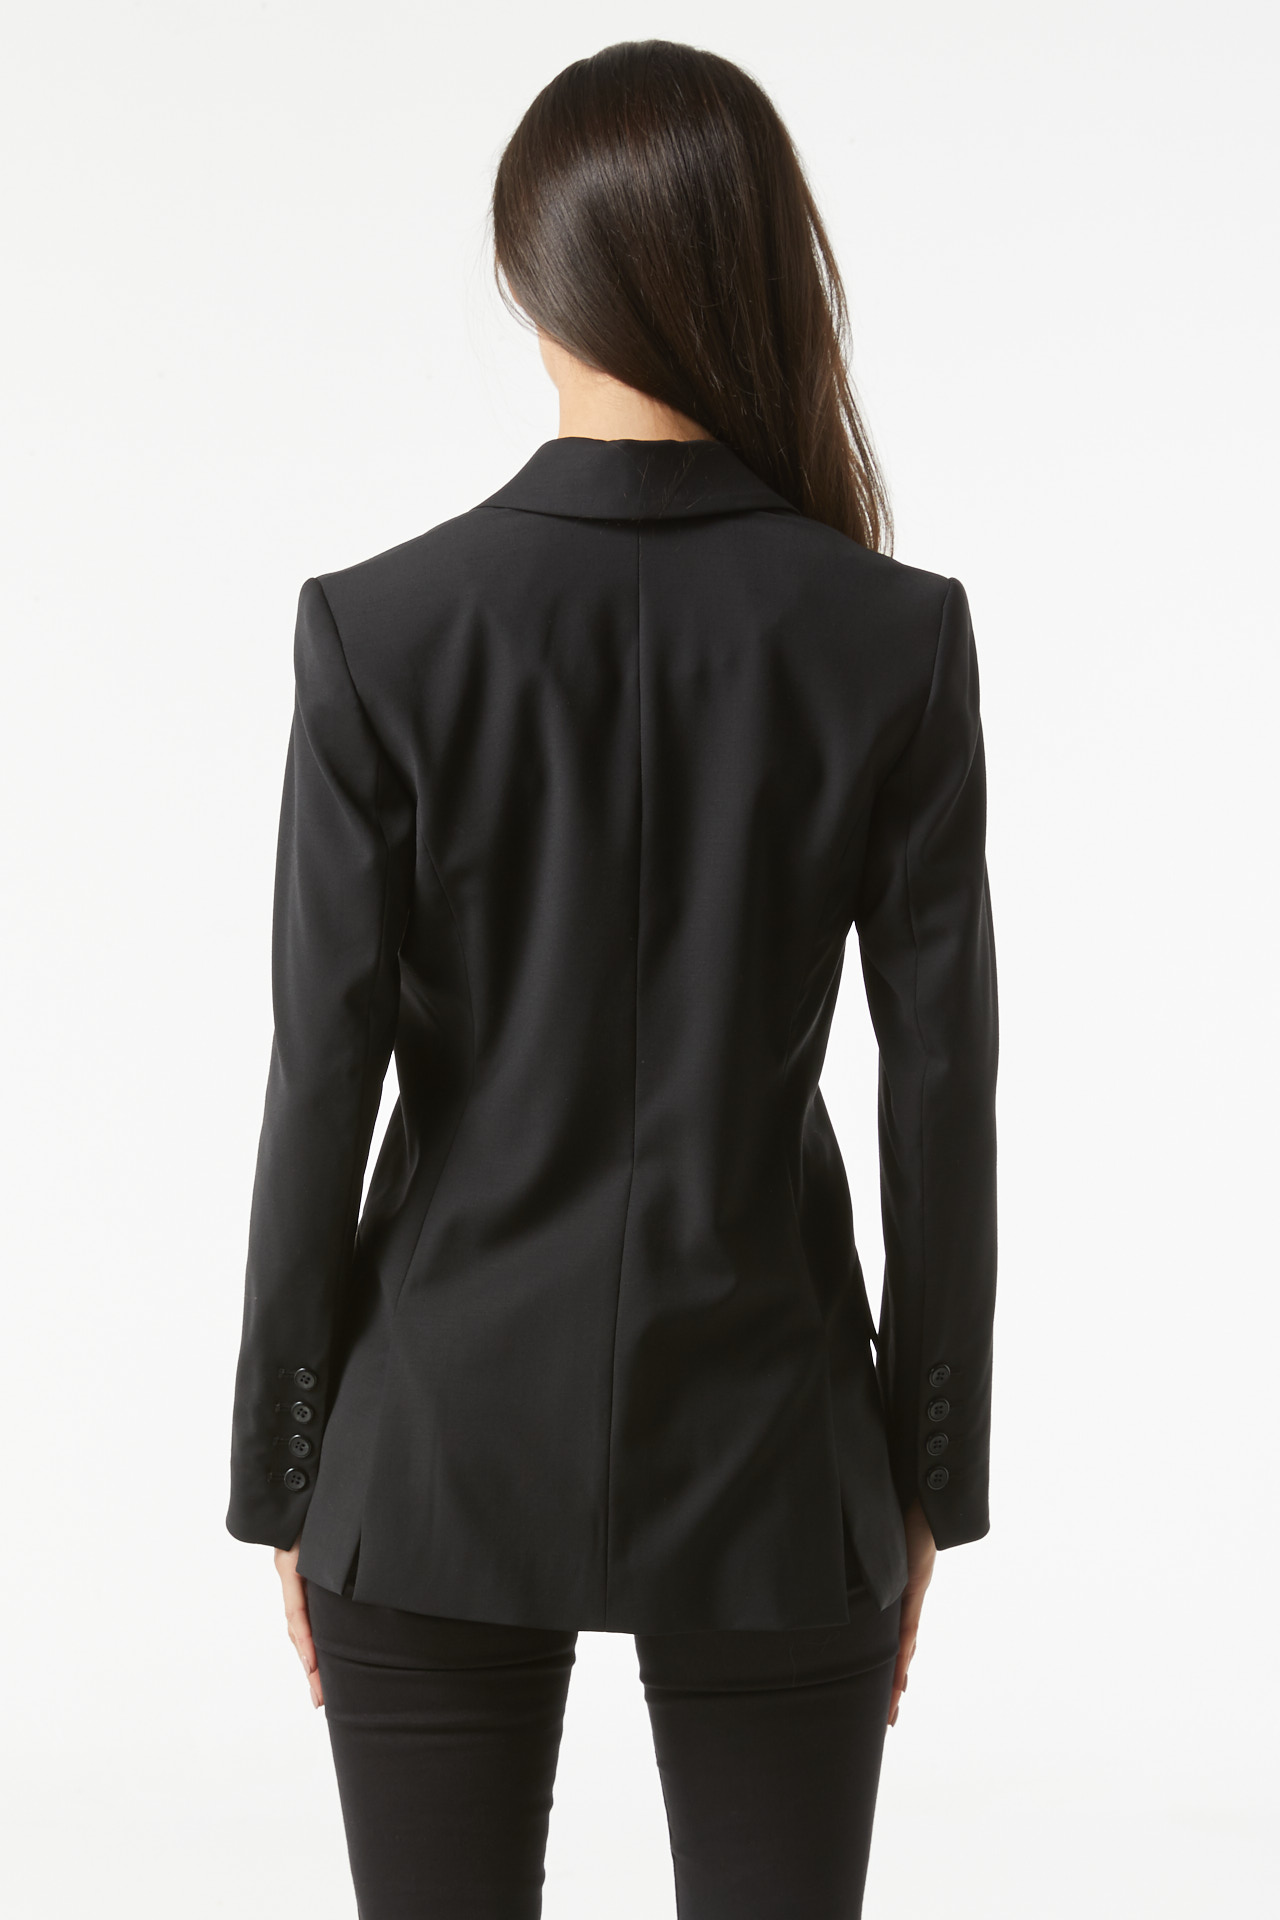 Back of model wearing Odena black blazer